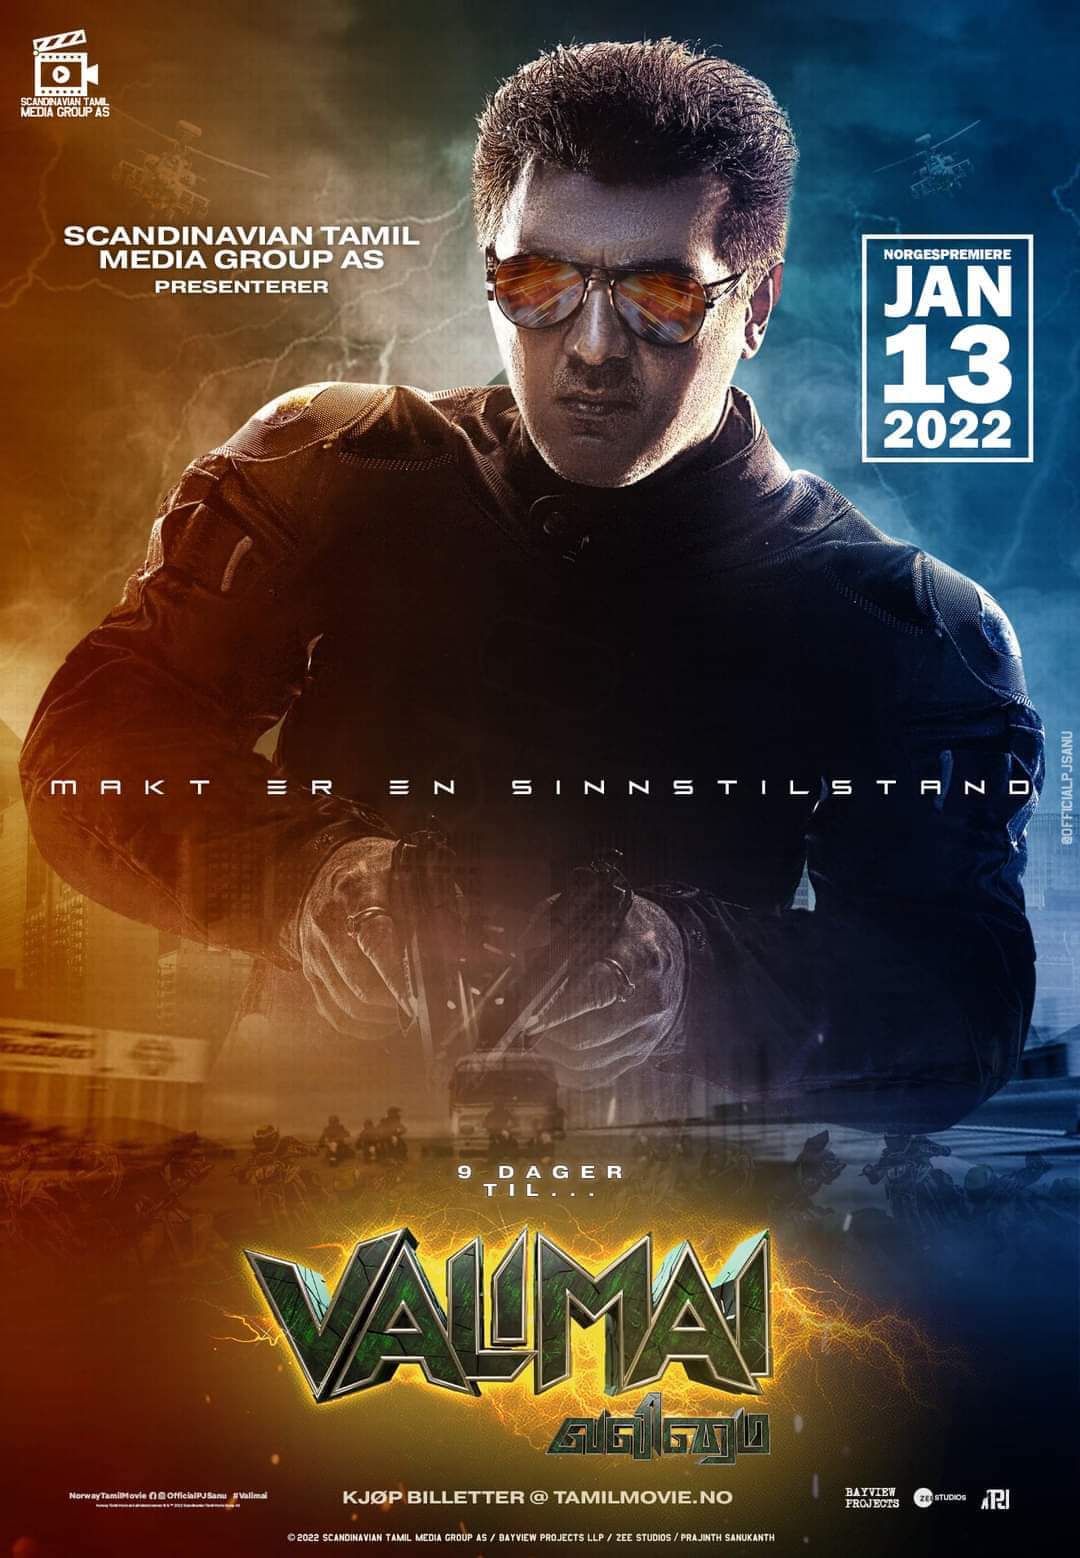 Ajith Kumar Valimai Movie Release Update from Distributors